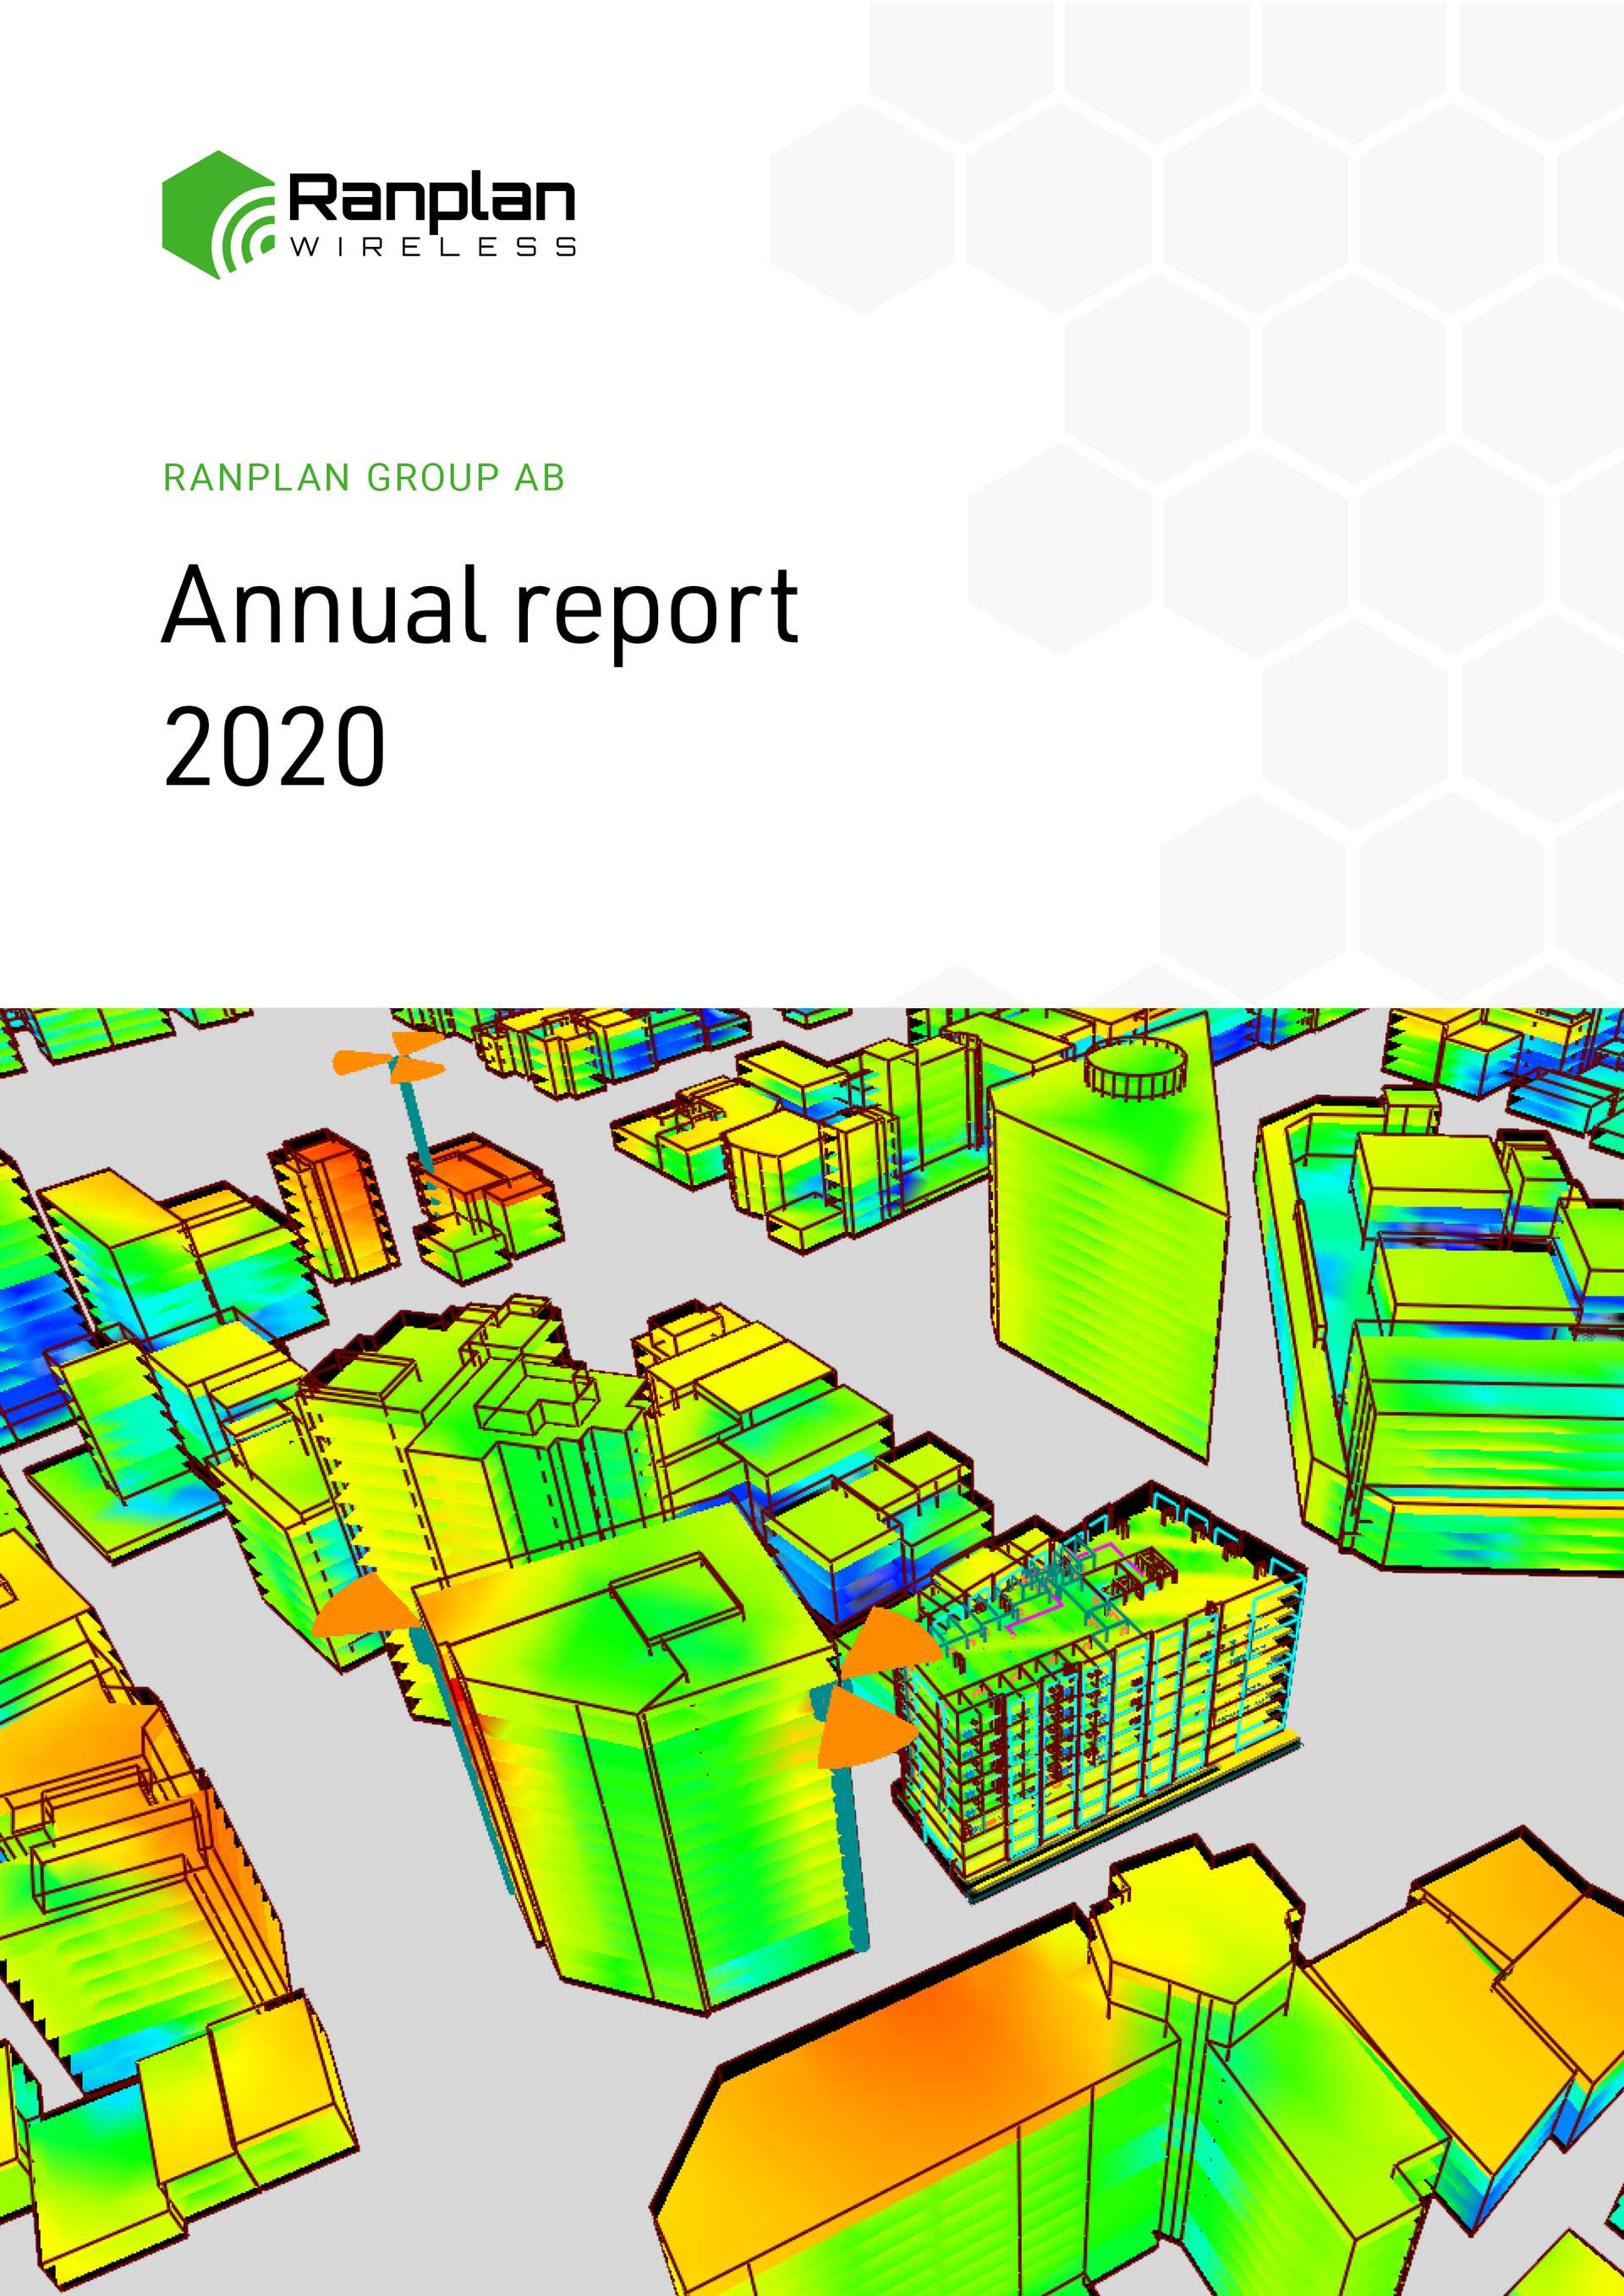 Report Cover - Annual report 2020